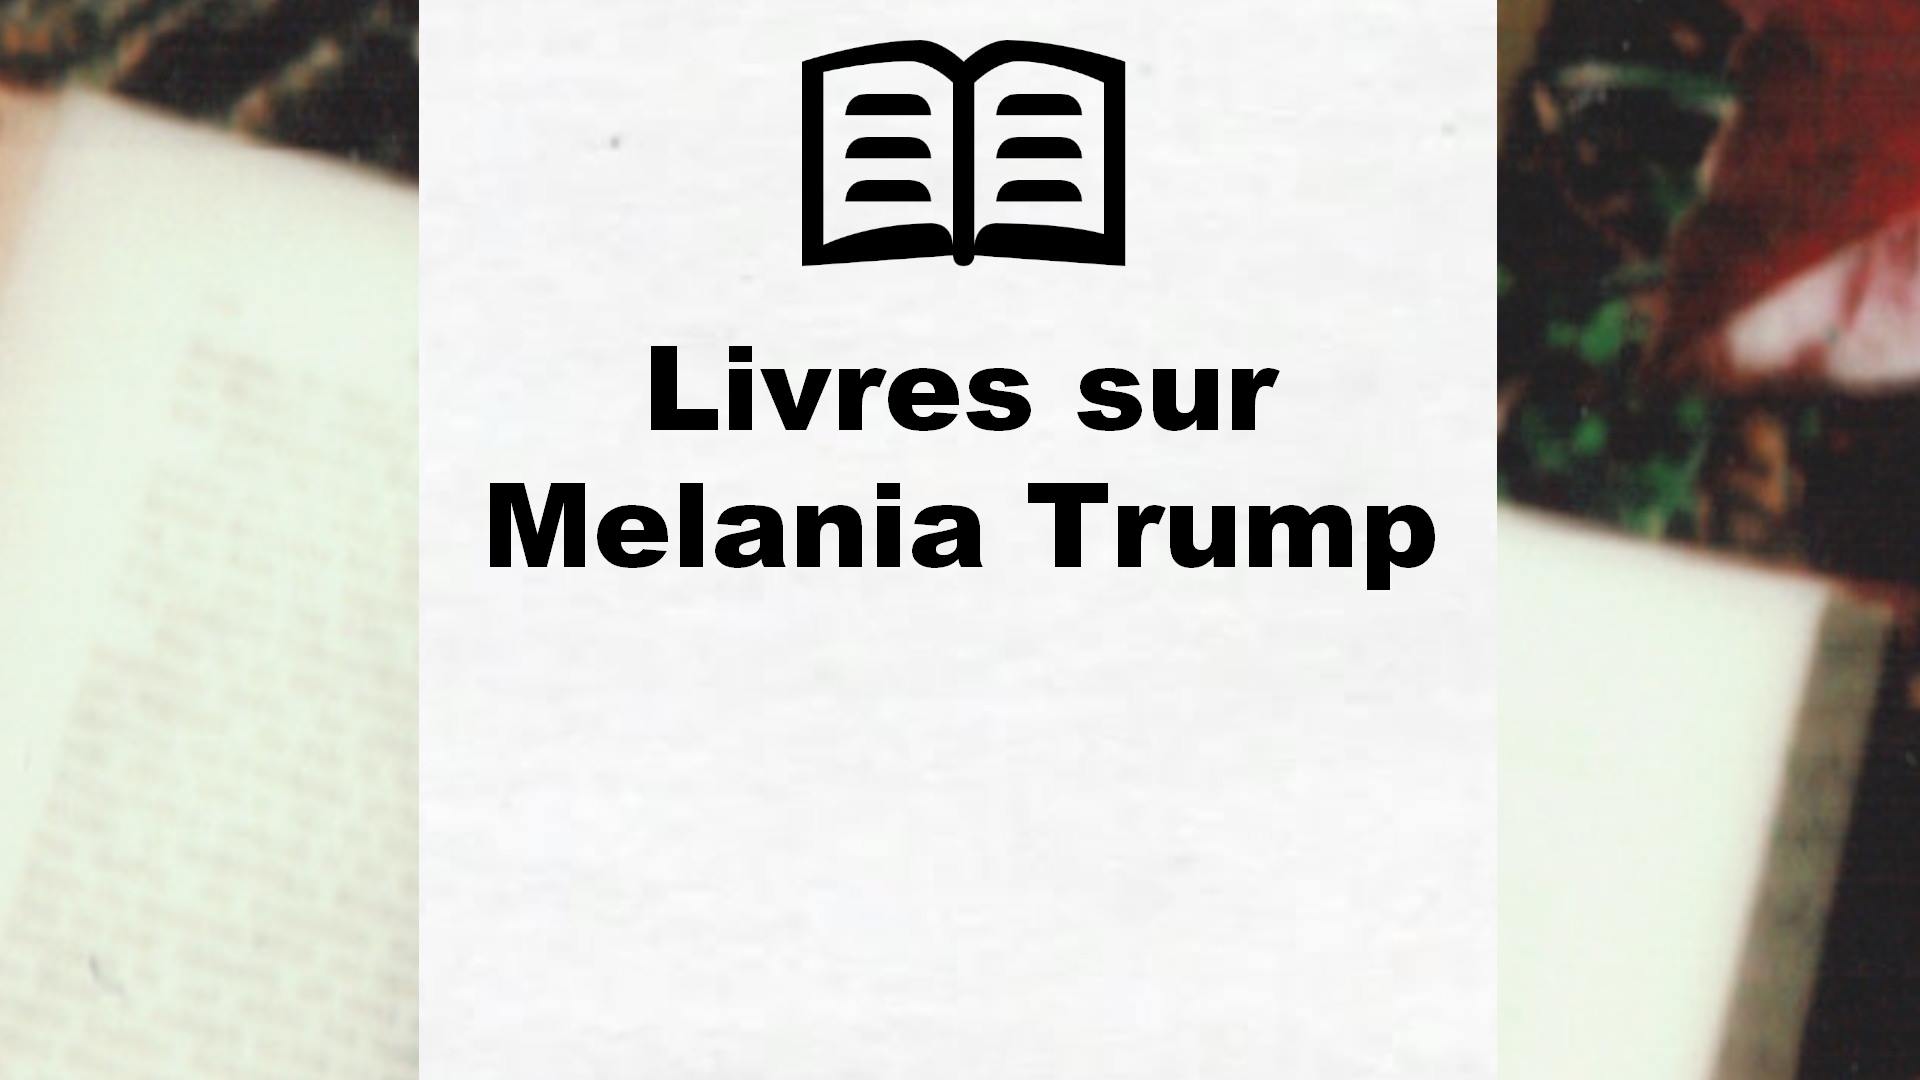 Livres sur Melania Trump